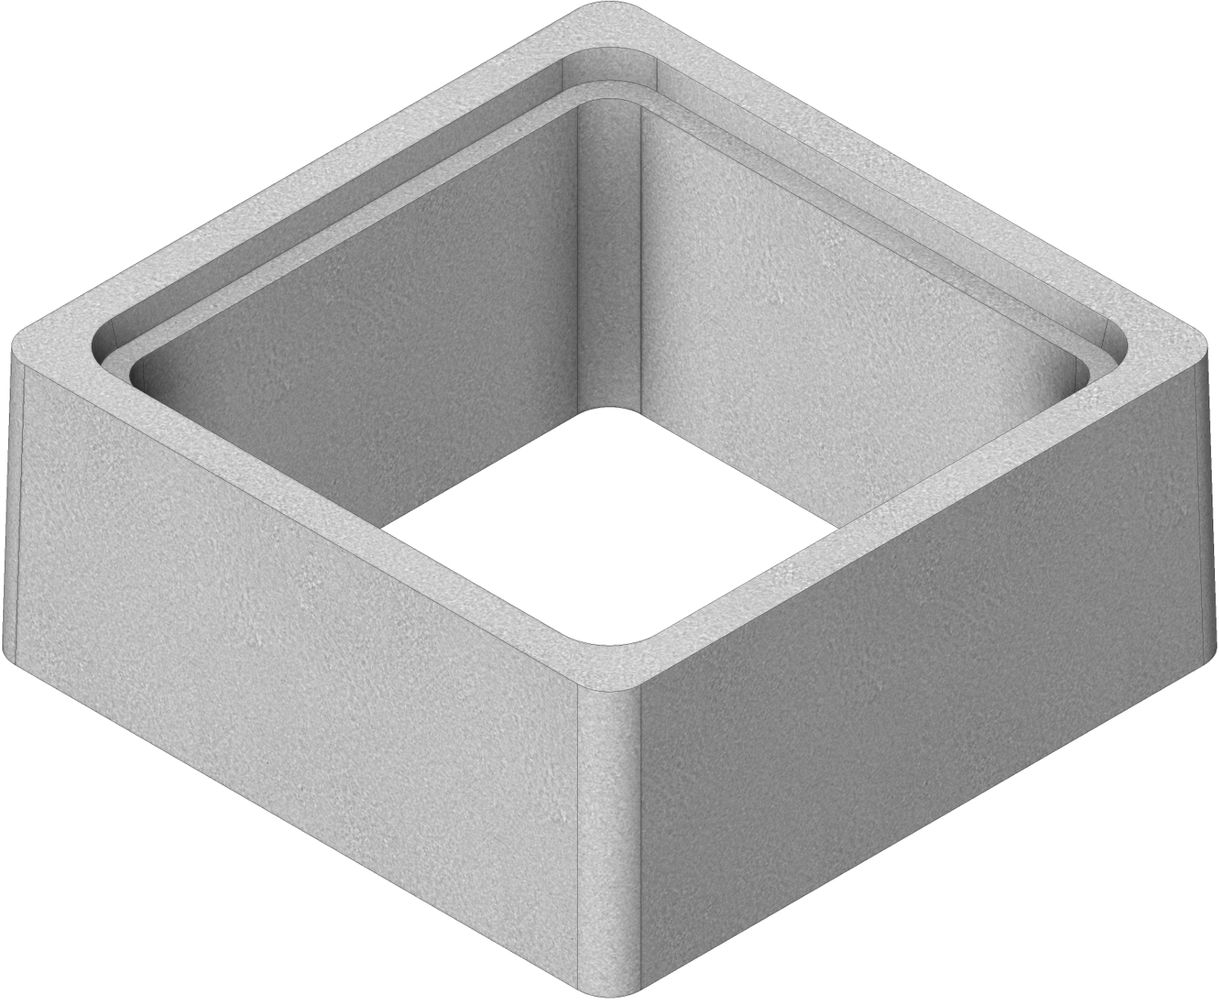 rehausse-beton-boite-pluviale-400x400-h350-thebault-0